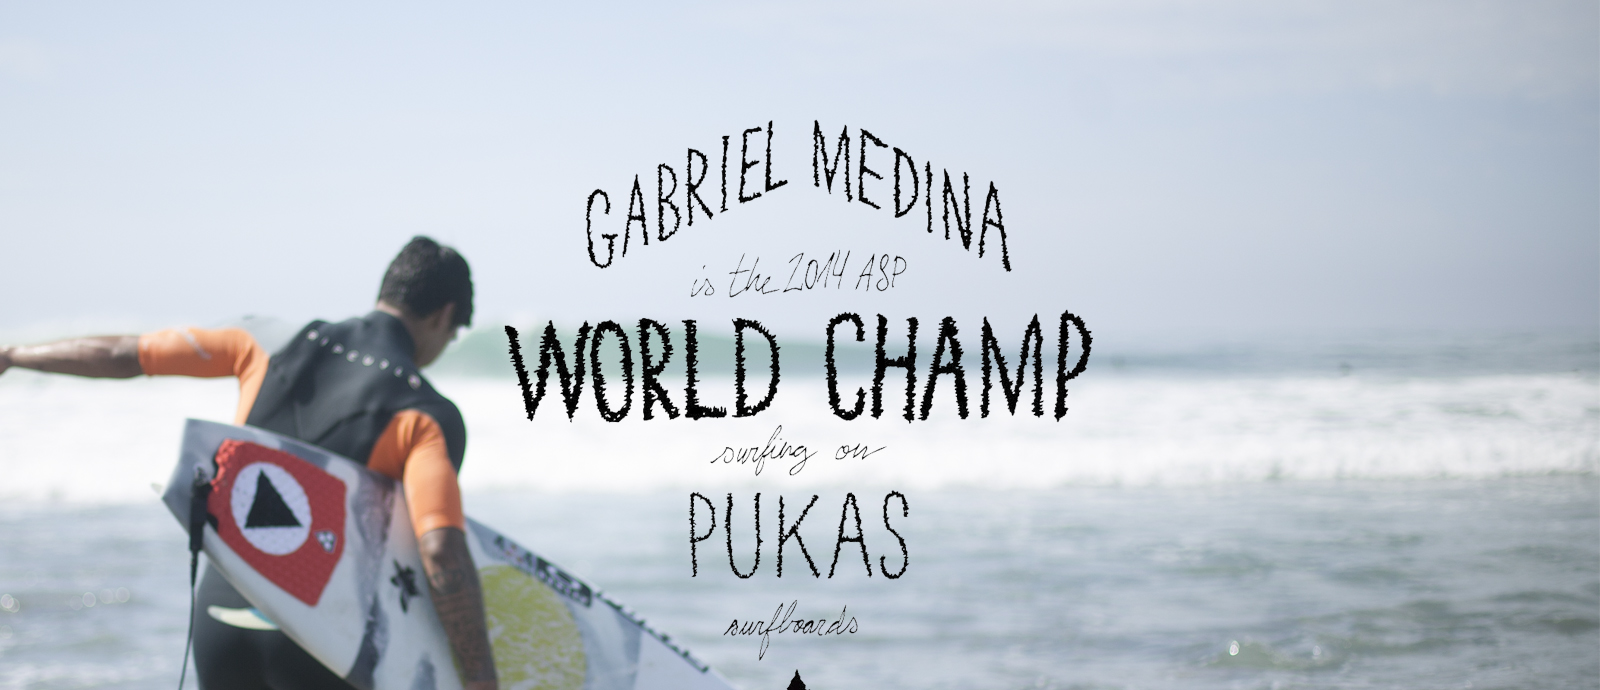 Pukas Surf Gabriel Medina World Champ